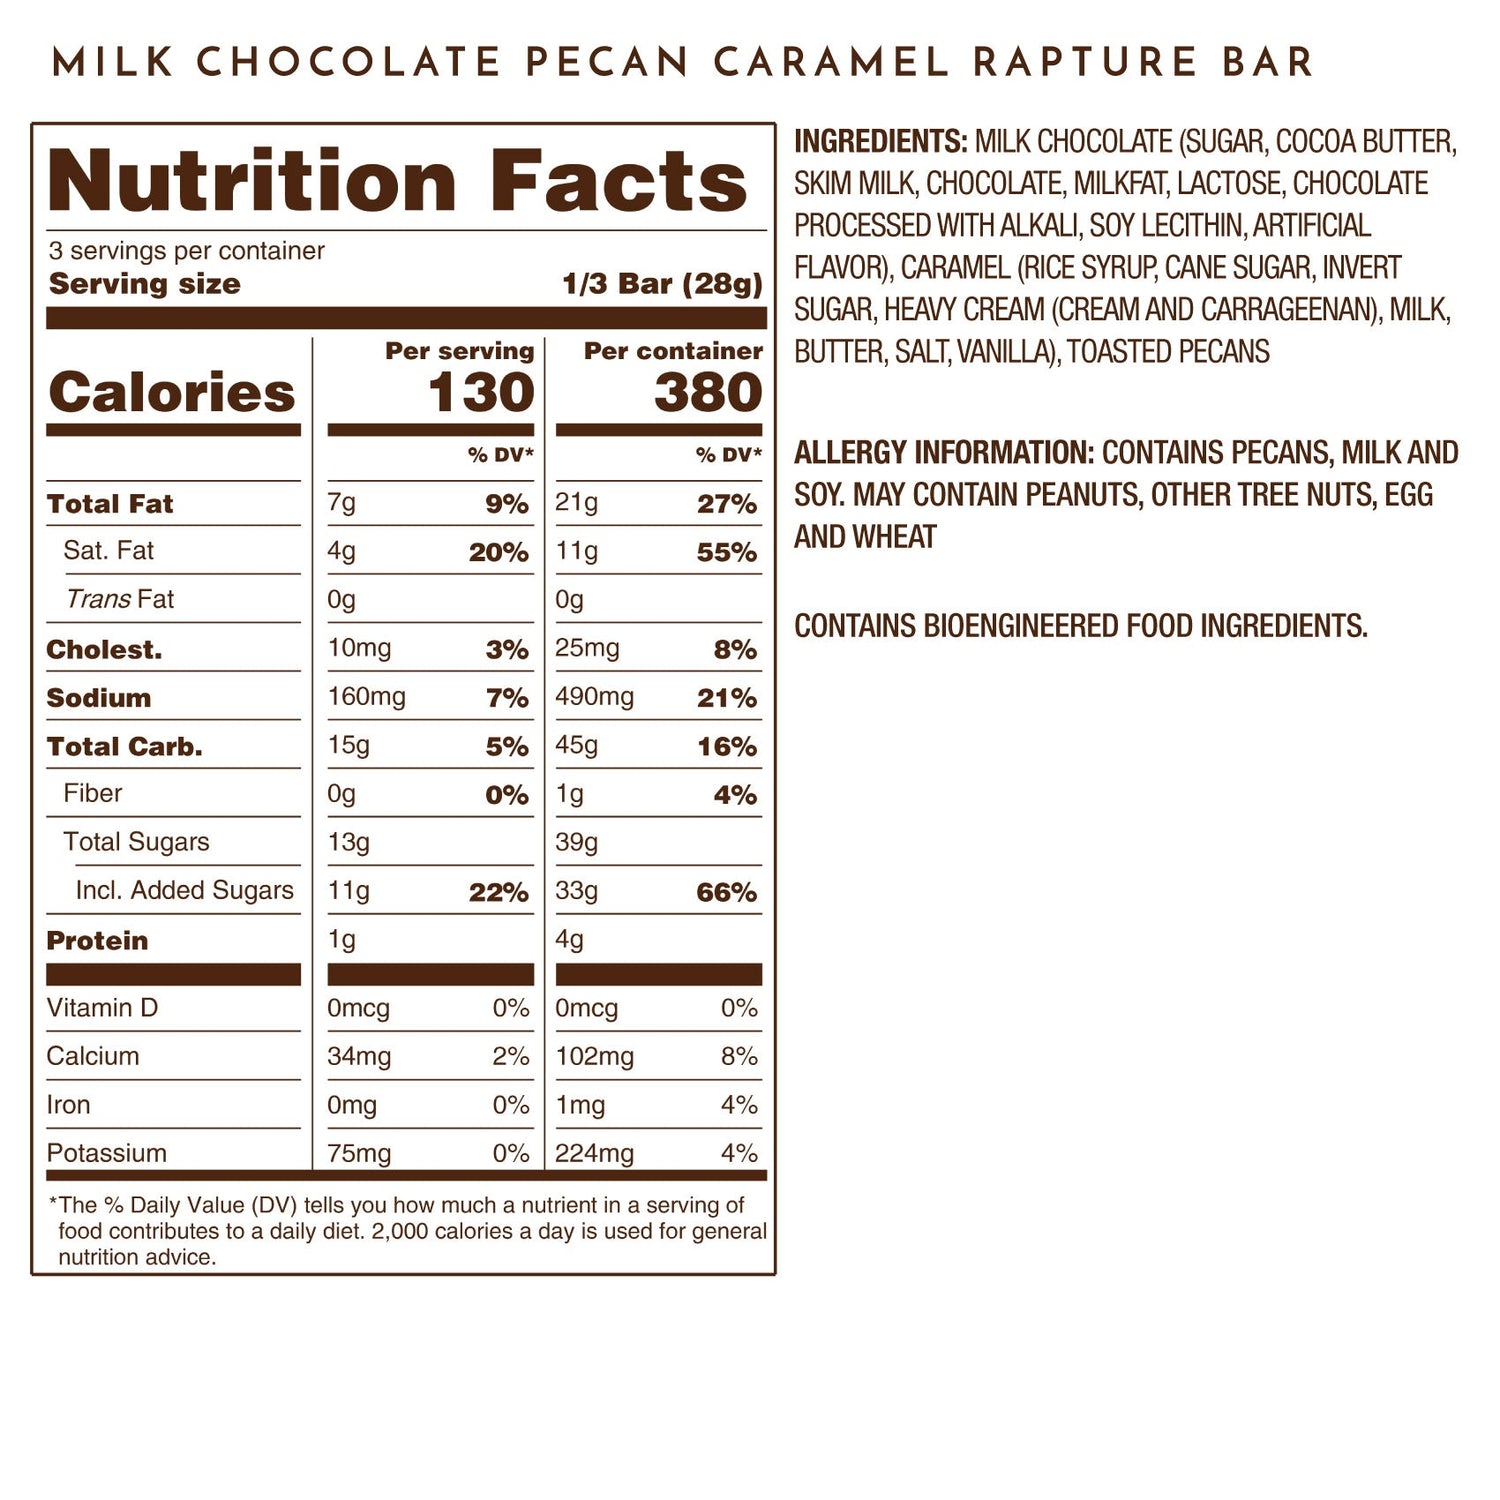 Pecan Caramel Rapture Milk Chocolate Tablet Bar Nutrition Facts